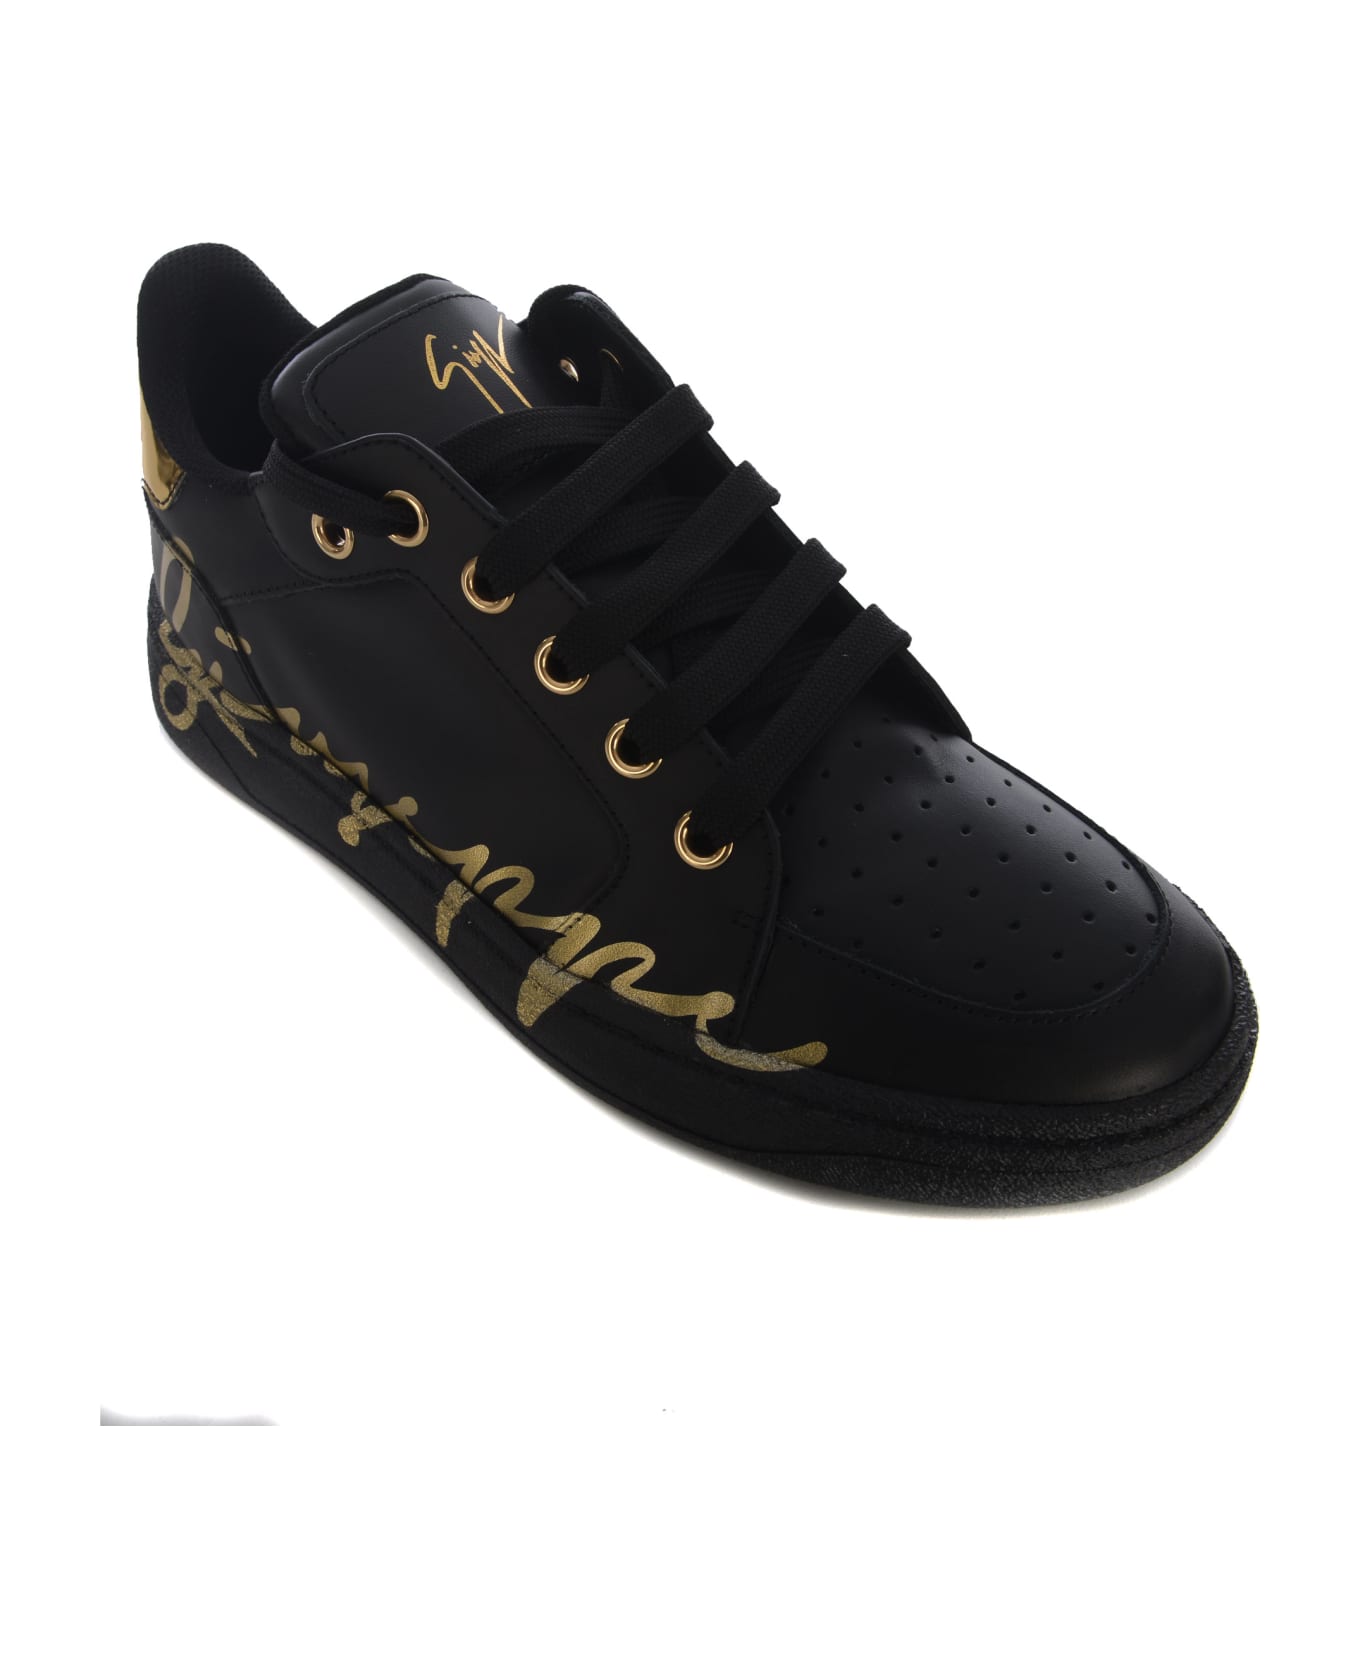 Giuseppe Zanotti Sneakers Giuseppe Zanotti "gz94" Made Of Leather - Nero スニーカー